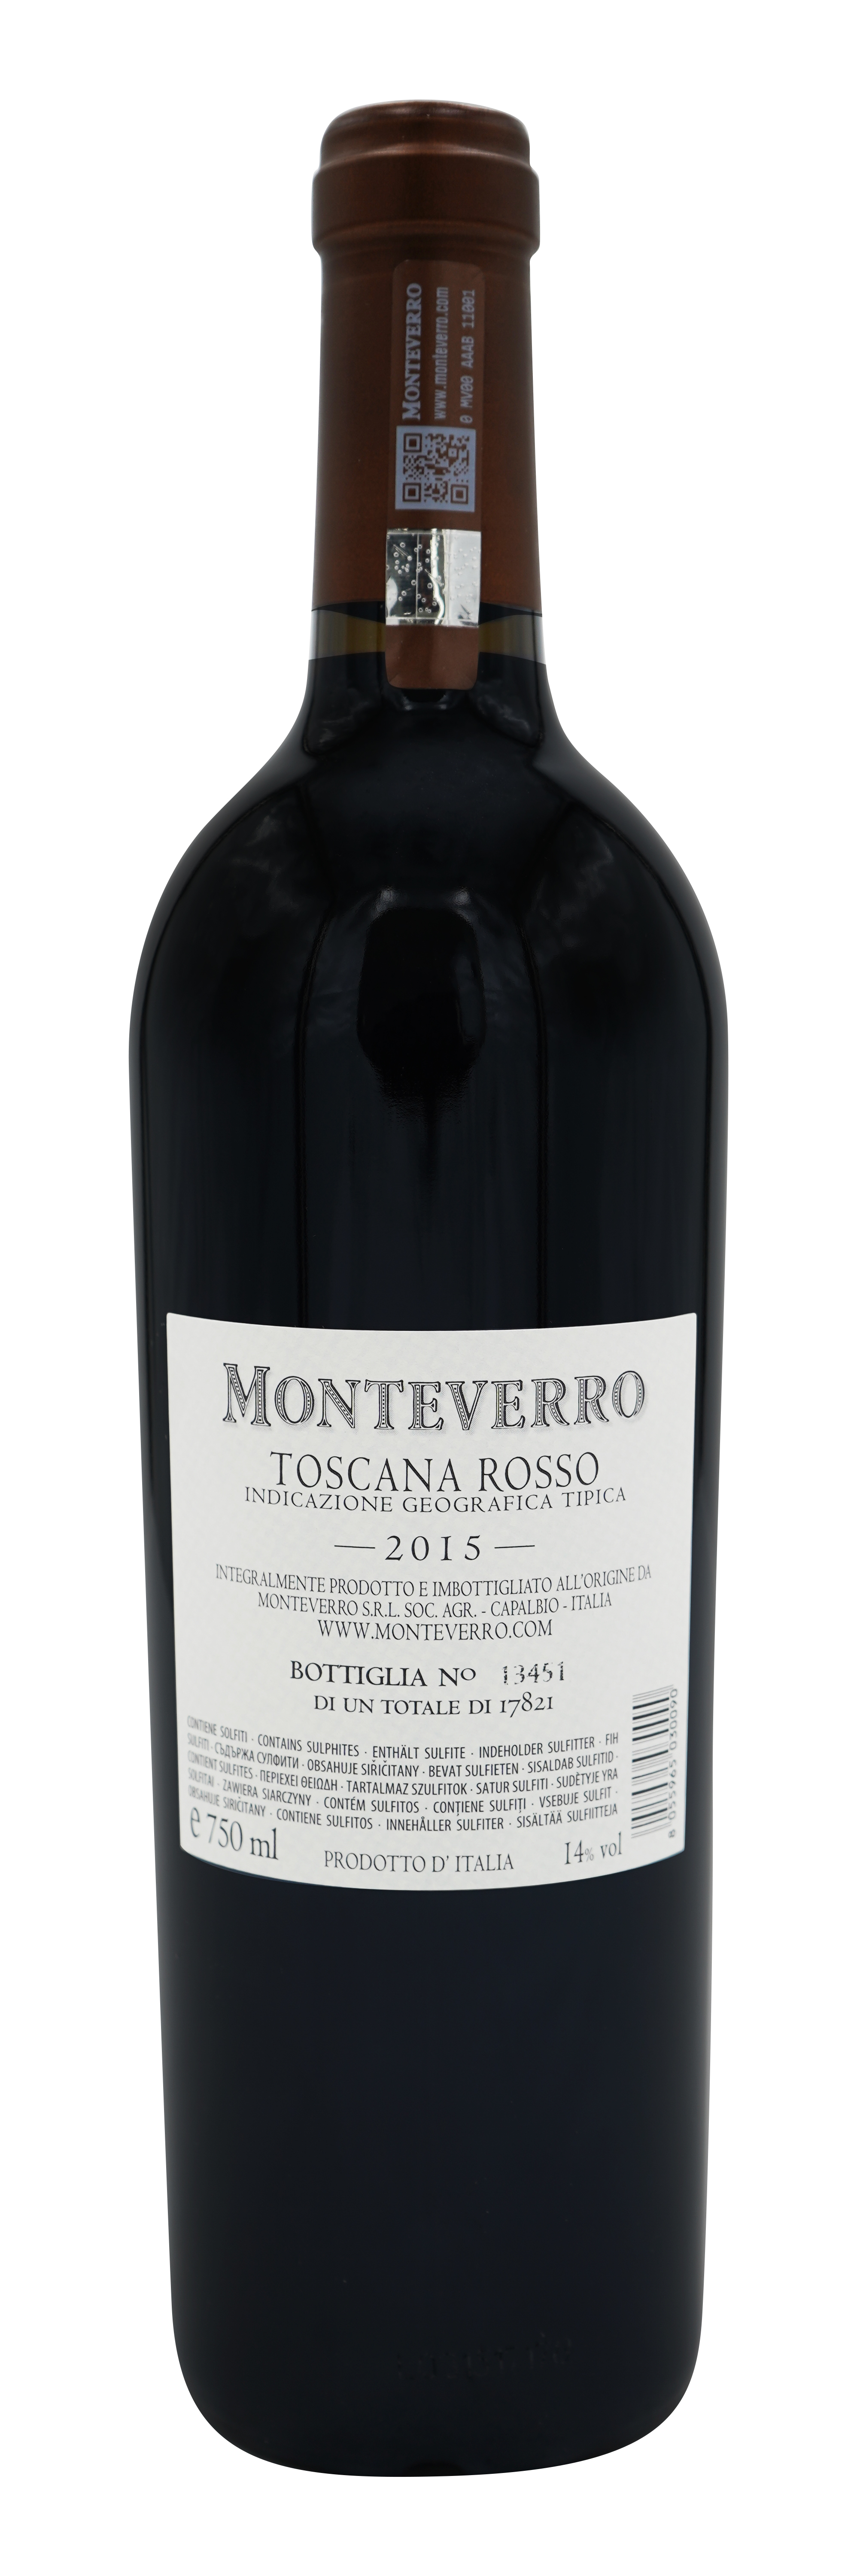 Monteverro 2015 - back label